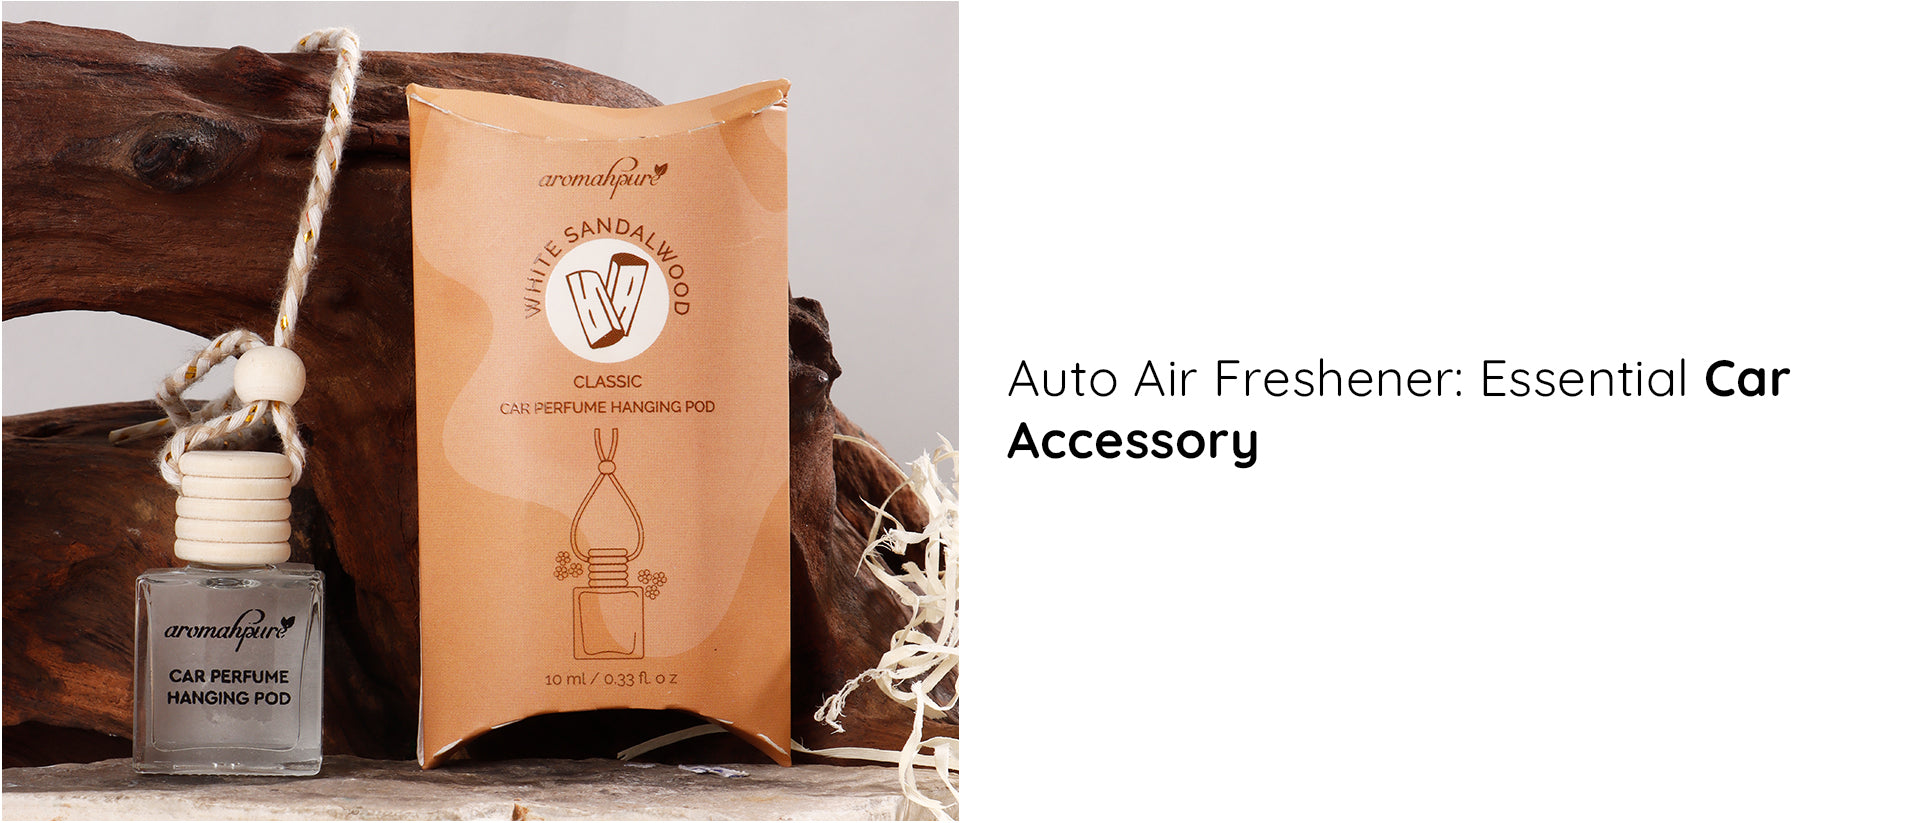 Auto Air Freshener: Essential Car Accessory